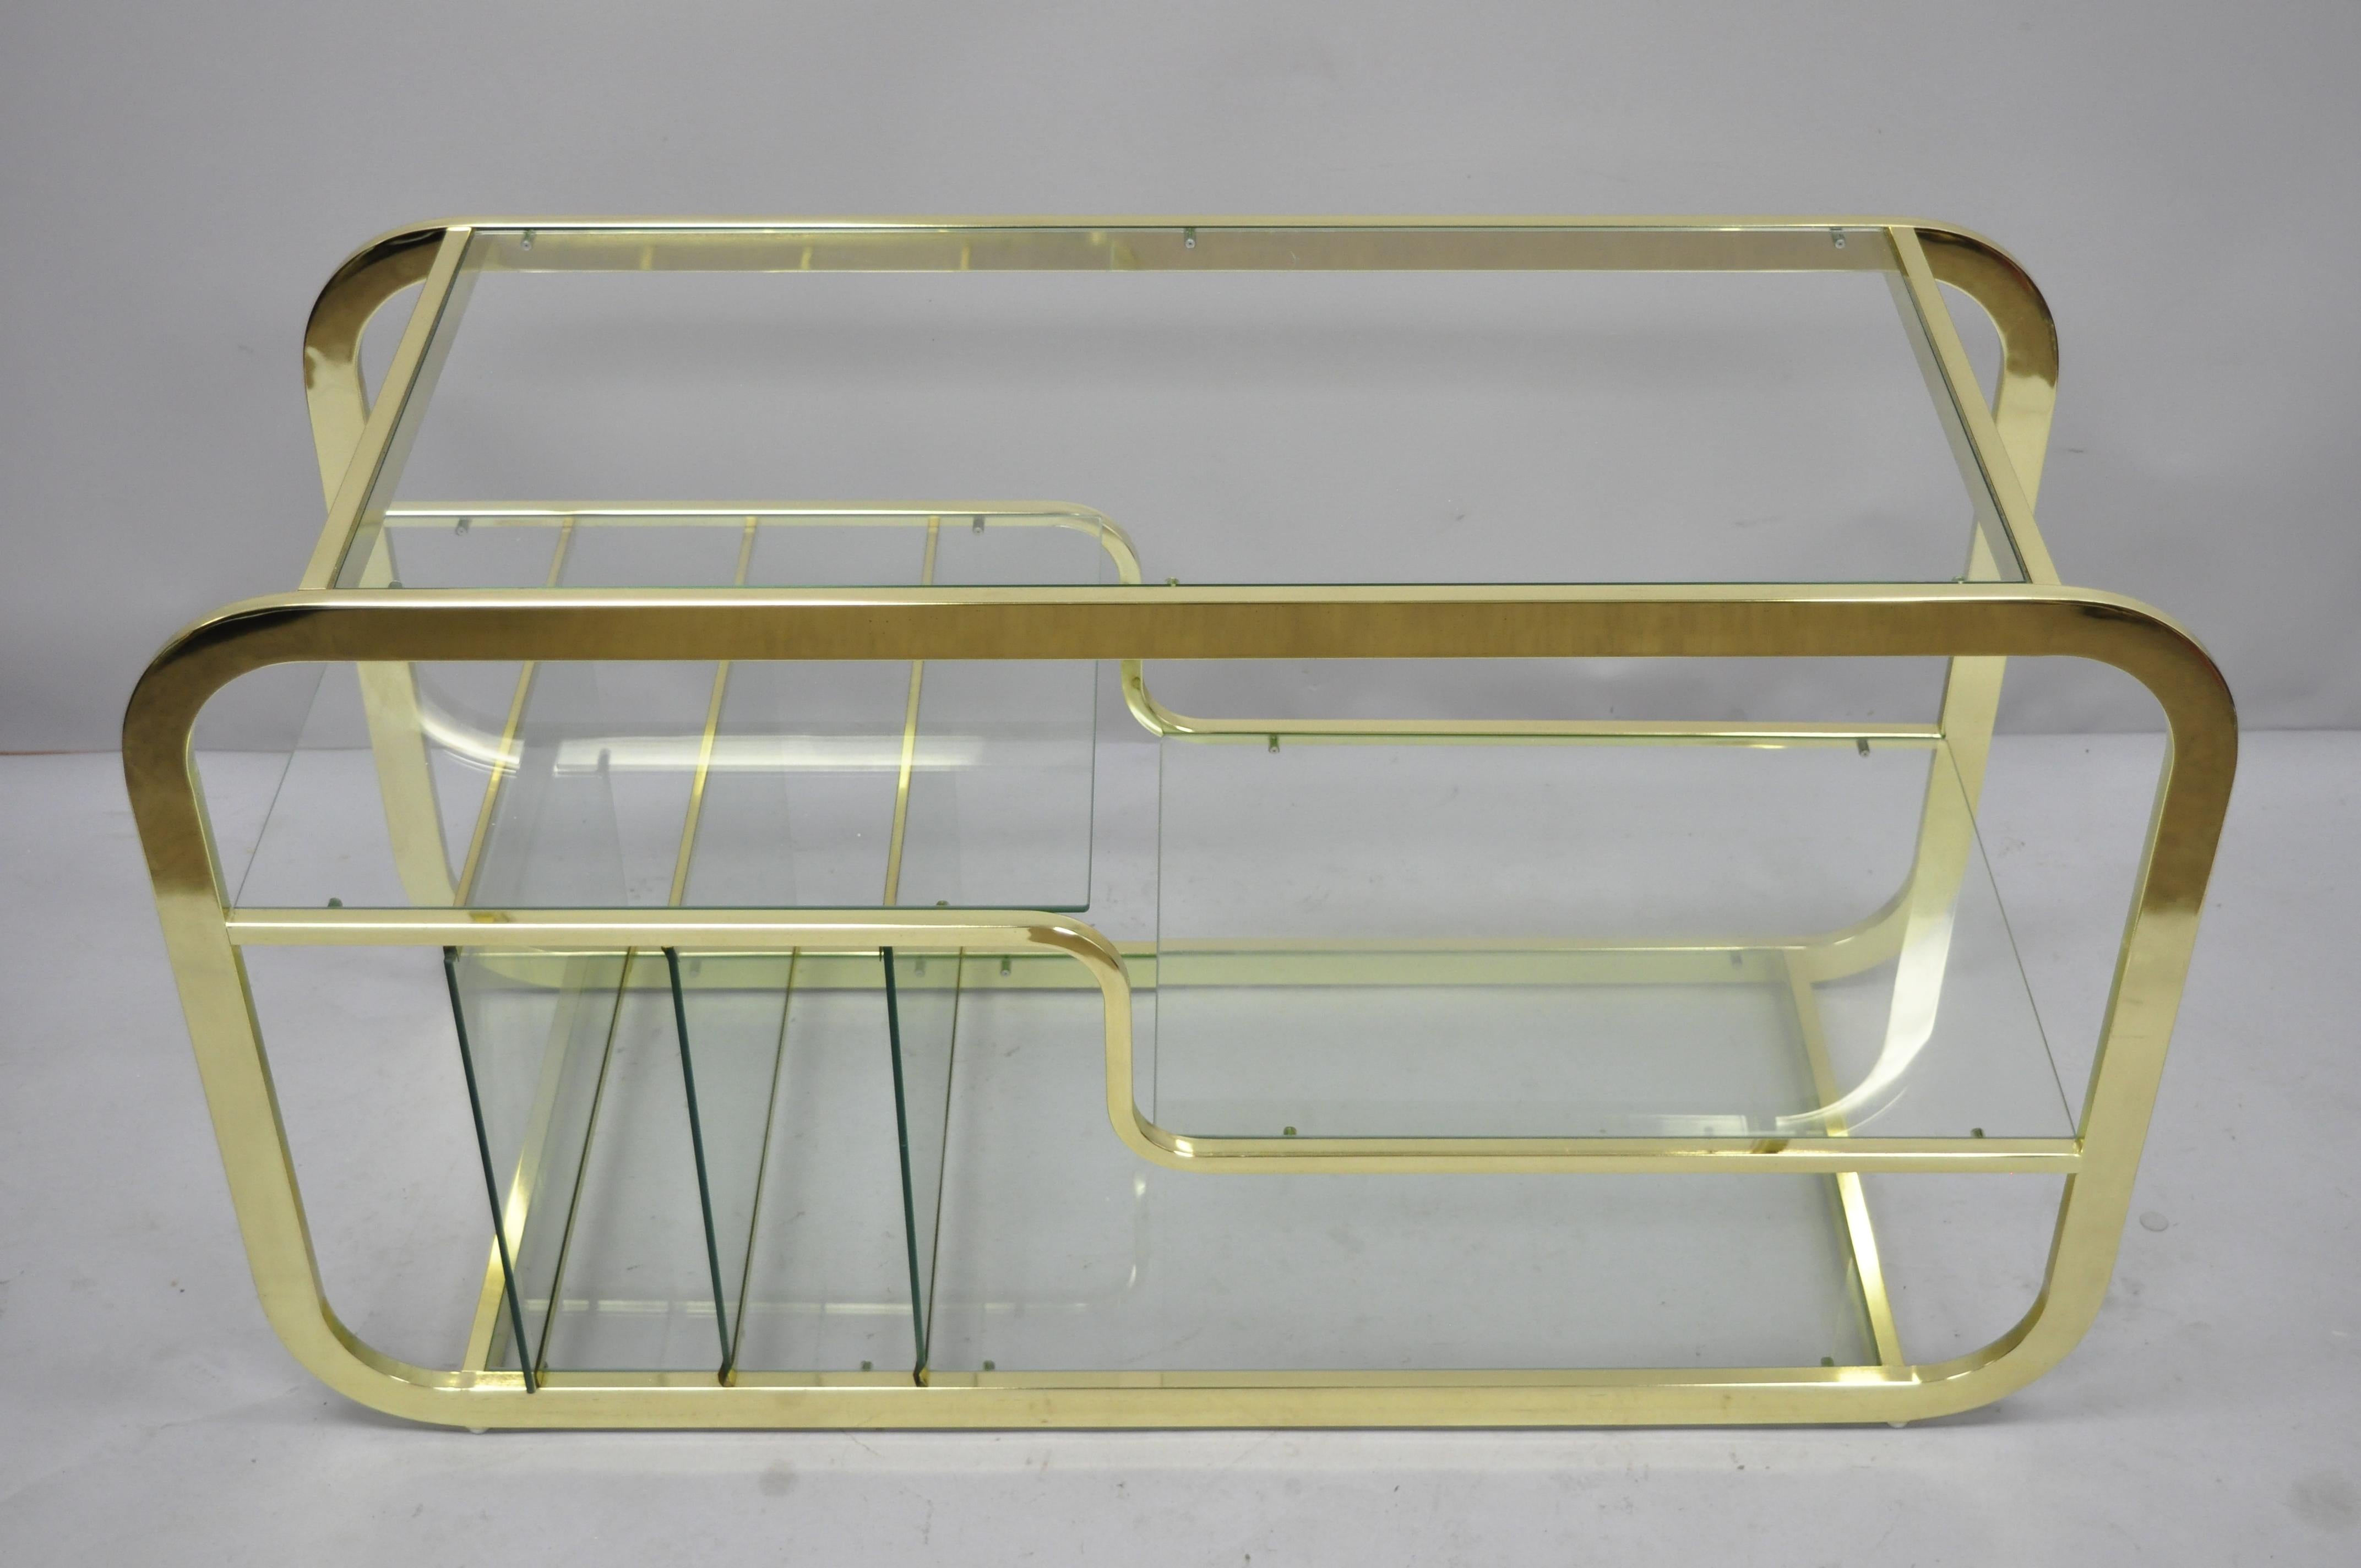 Mid-Century Modern brass and glass server bar after Milo Baughman. Item features 4 glass shelves, 3 glass dividers, brass plated metal frame, clean modernist lines, sleek sculptural form, circa 1970. Measurements: 26